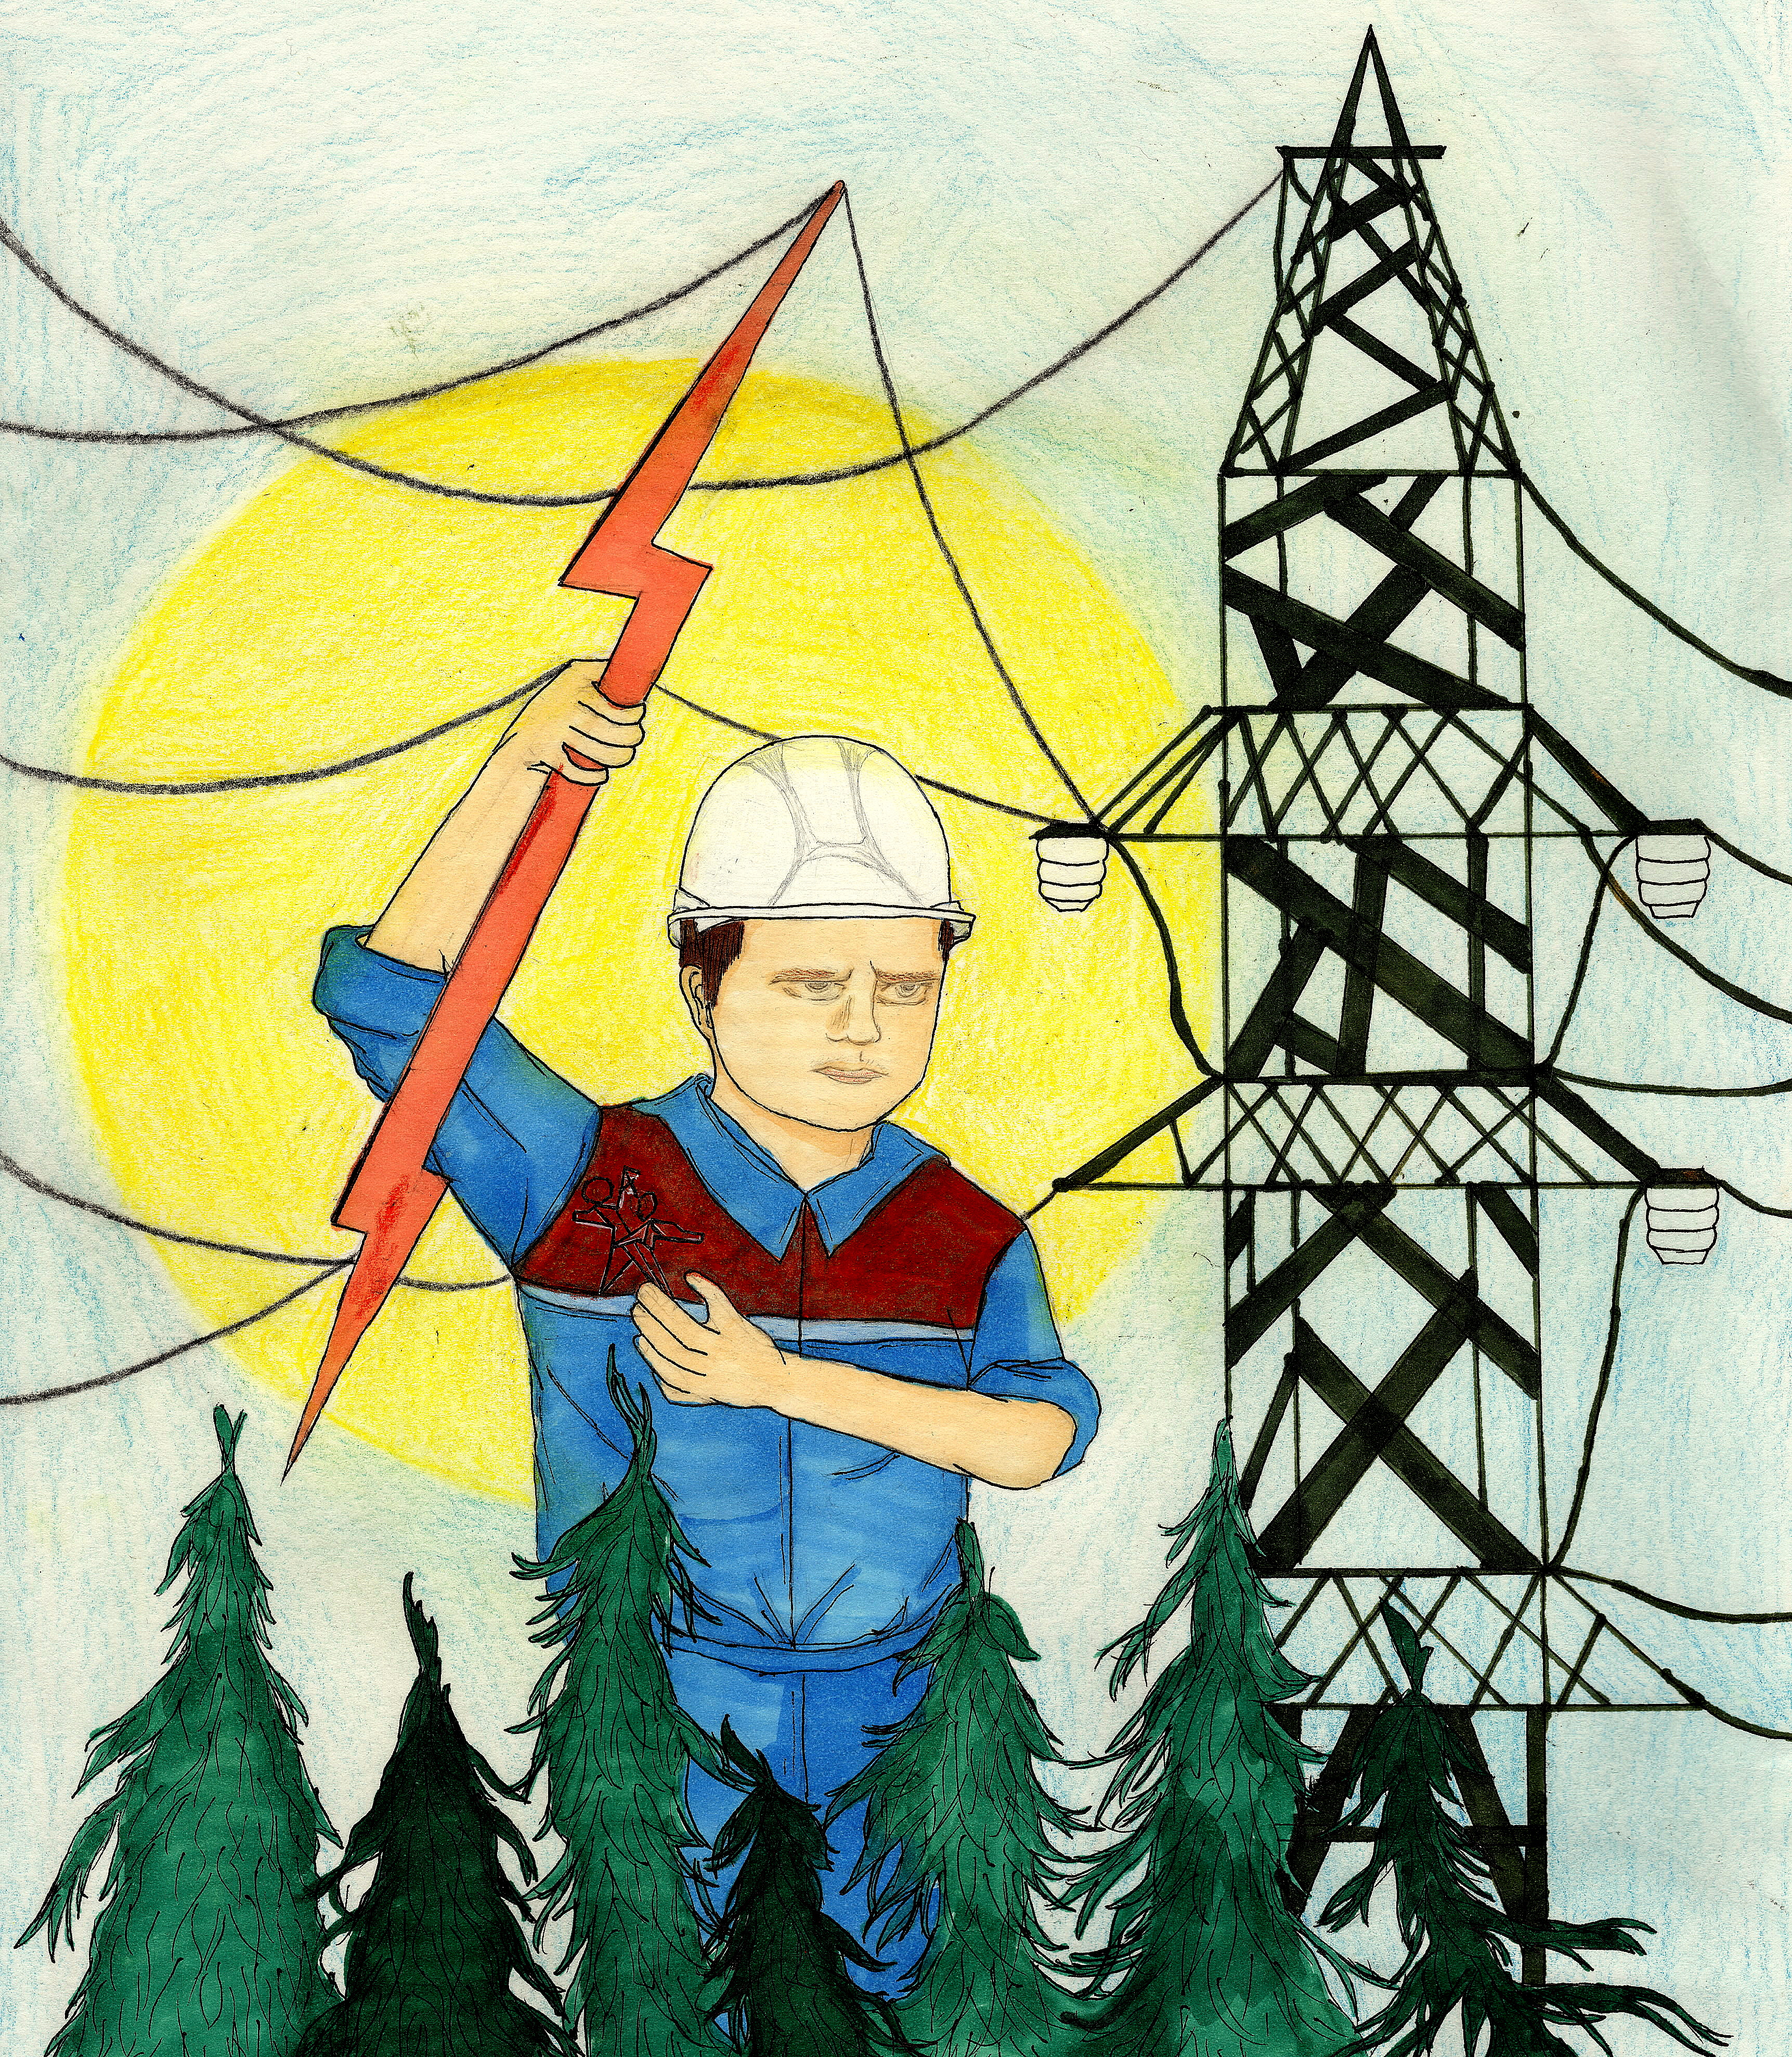 Рисунок ко Дню Энергетика